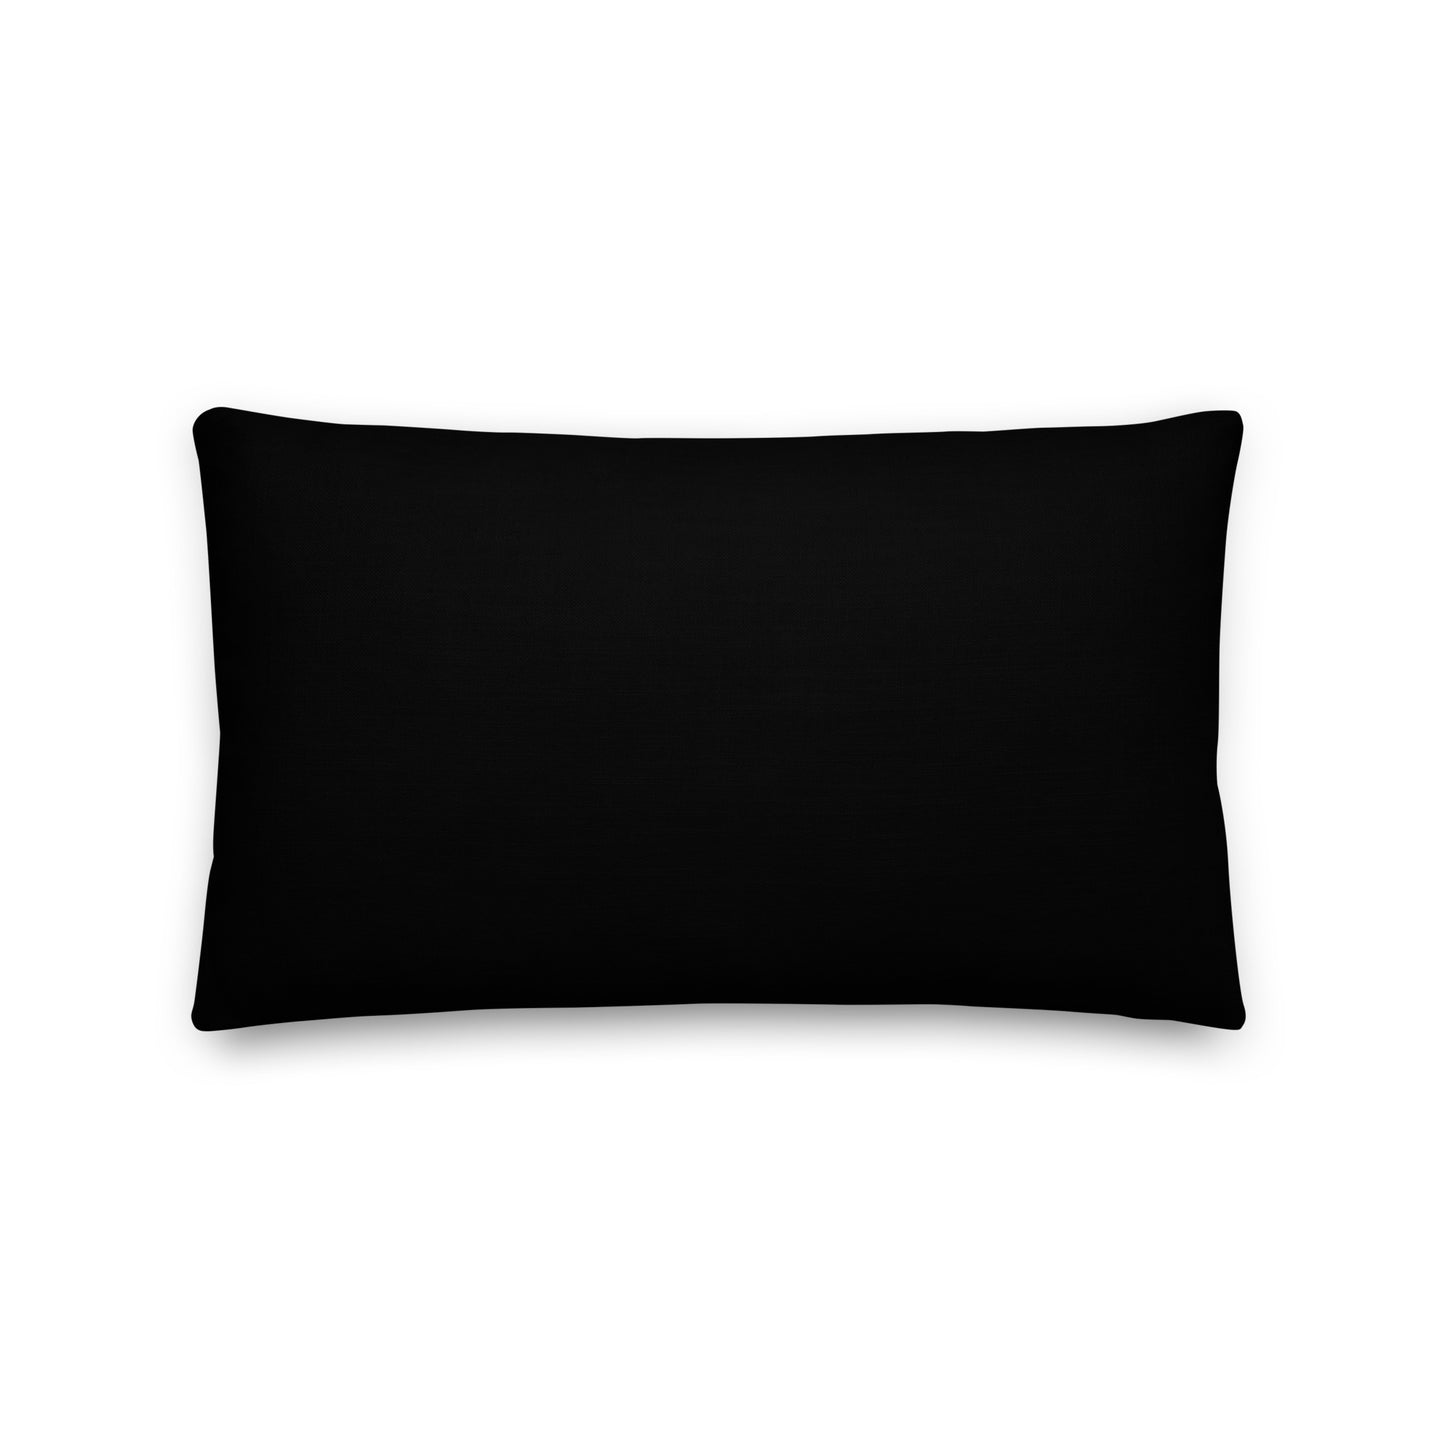 Ninja Boy Premium Pillow